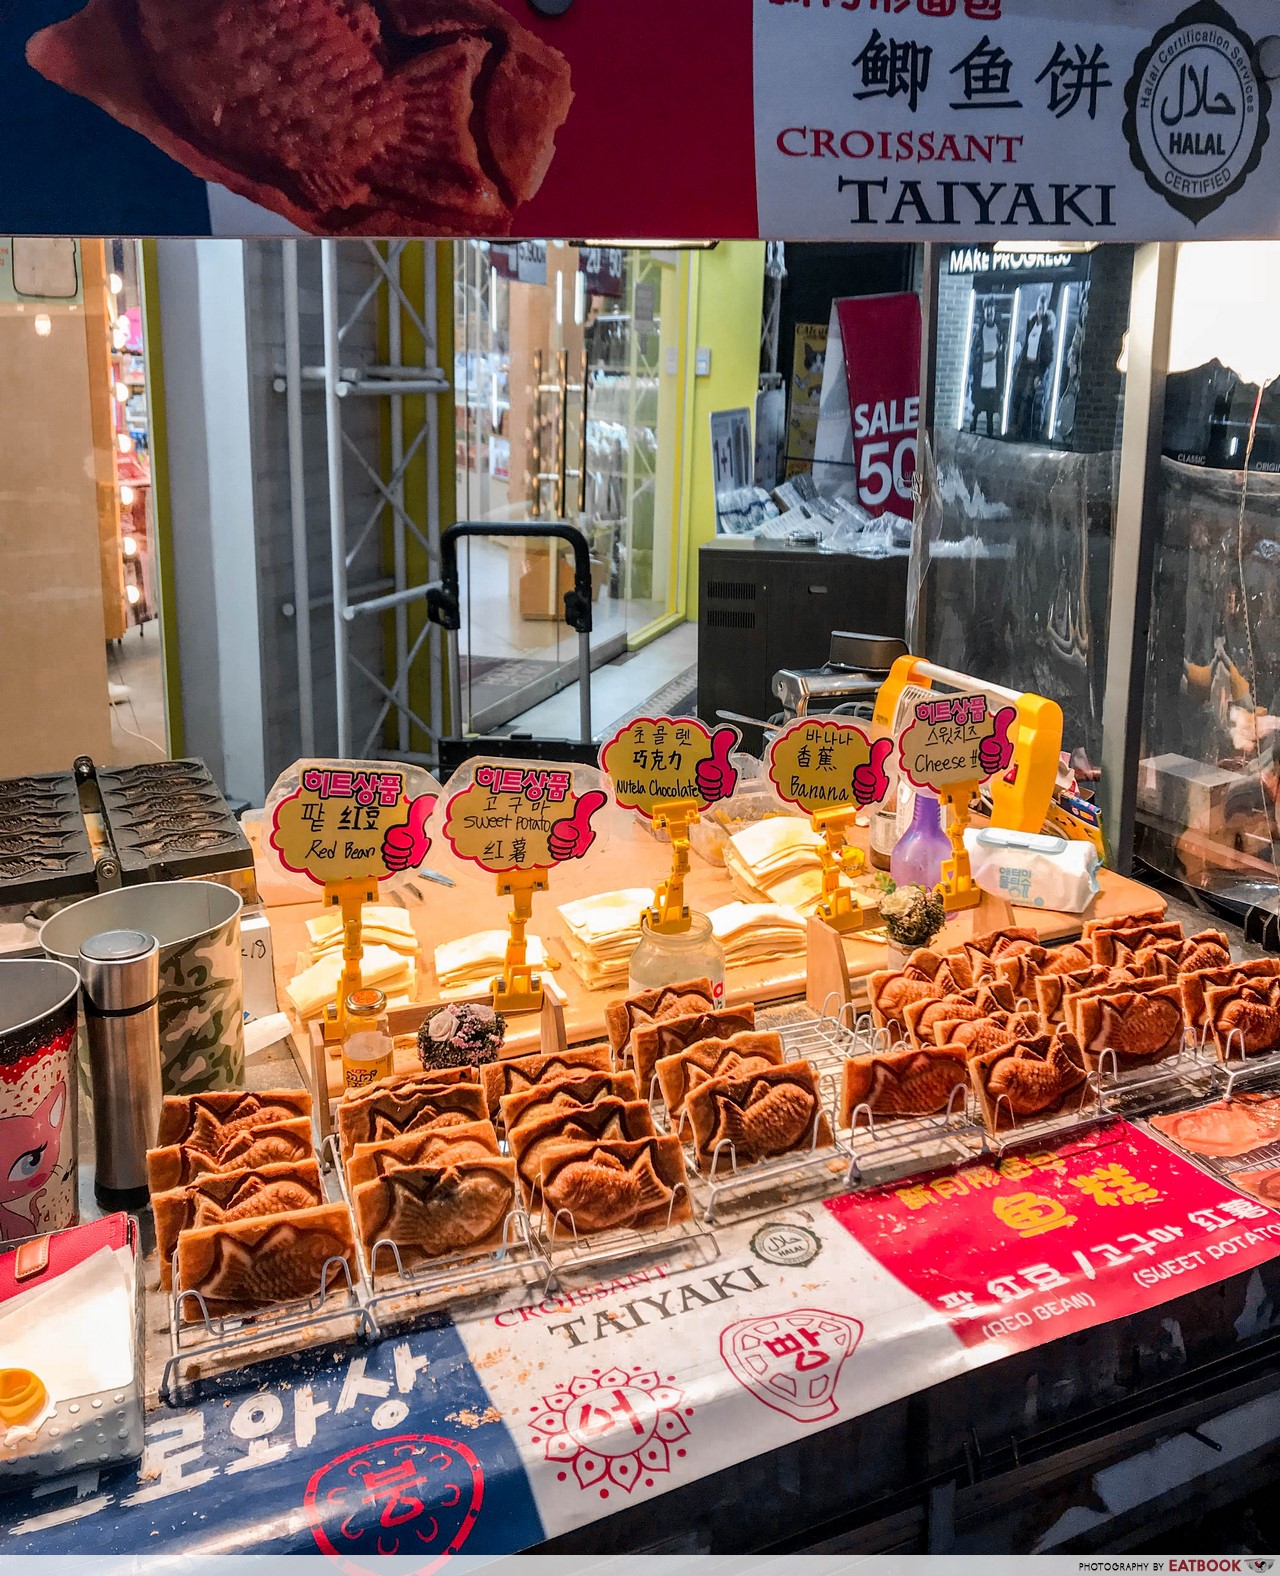 Halal Food places In Seoul - Croissant Taiyaki